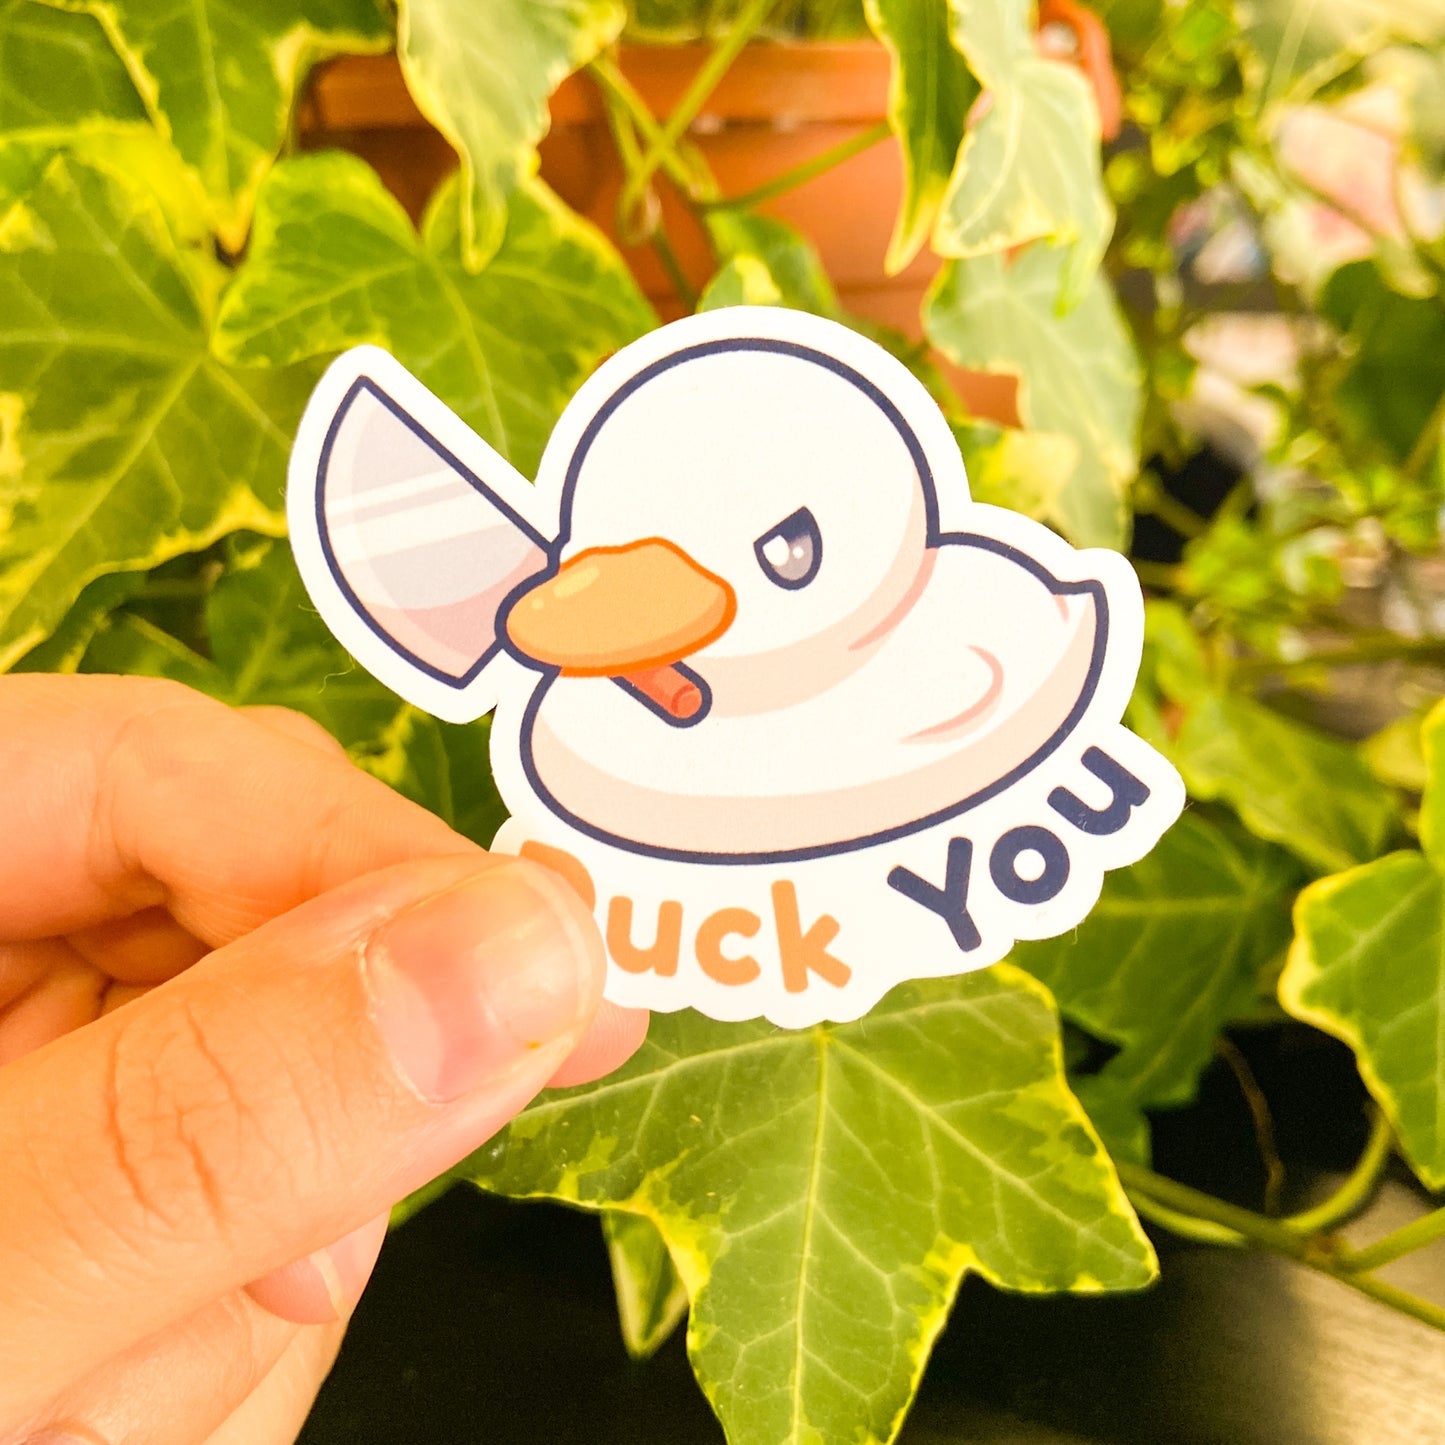 Duck you sticker